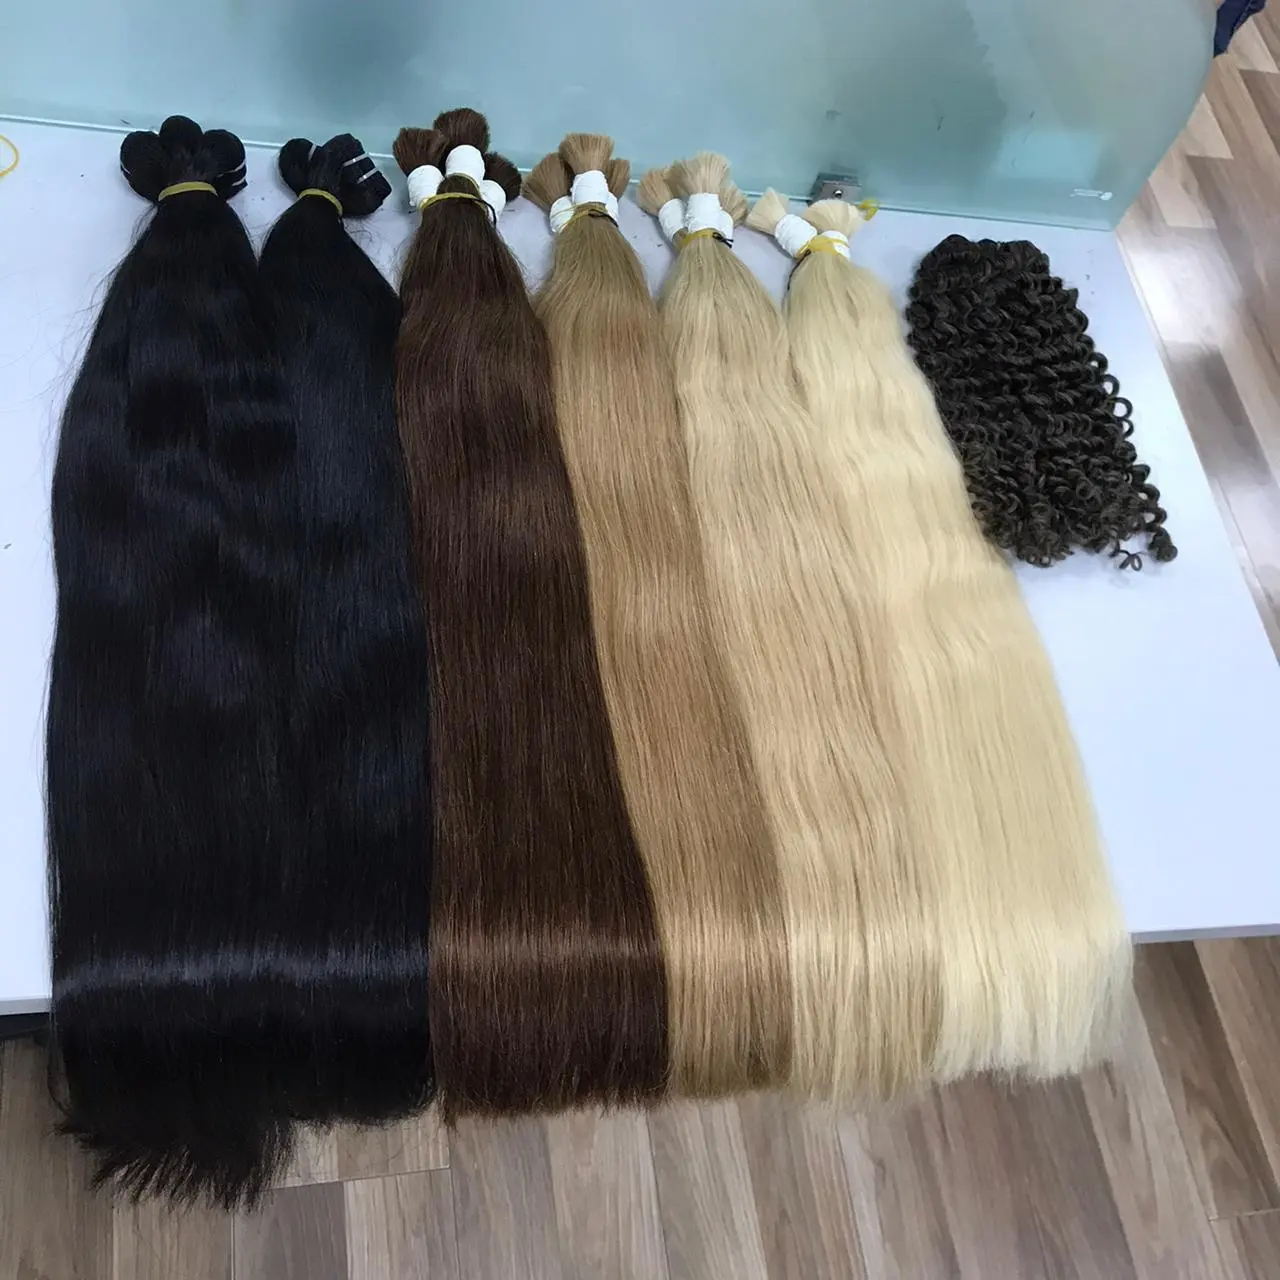 100 real raw human virgin hair unprocessed price hair bundles for black woman TOP raw cuticle aligned hair ODM OEM